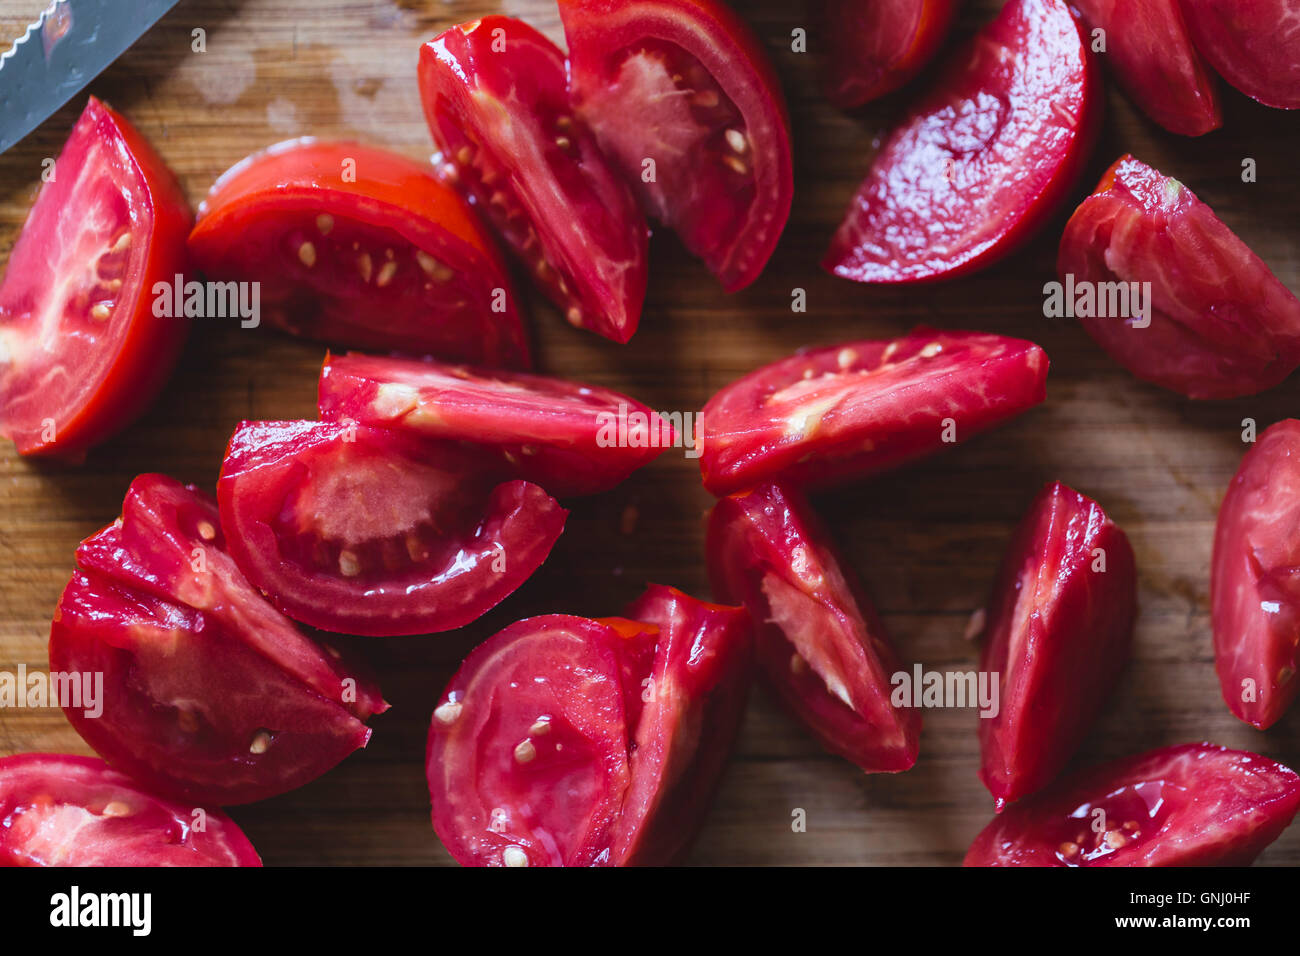 Sliced tomatoes Stock Photo